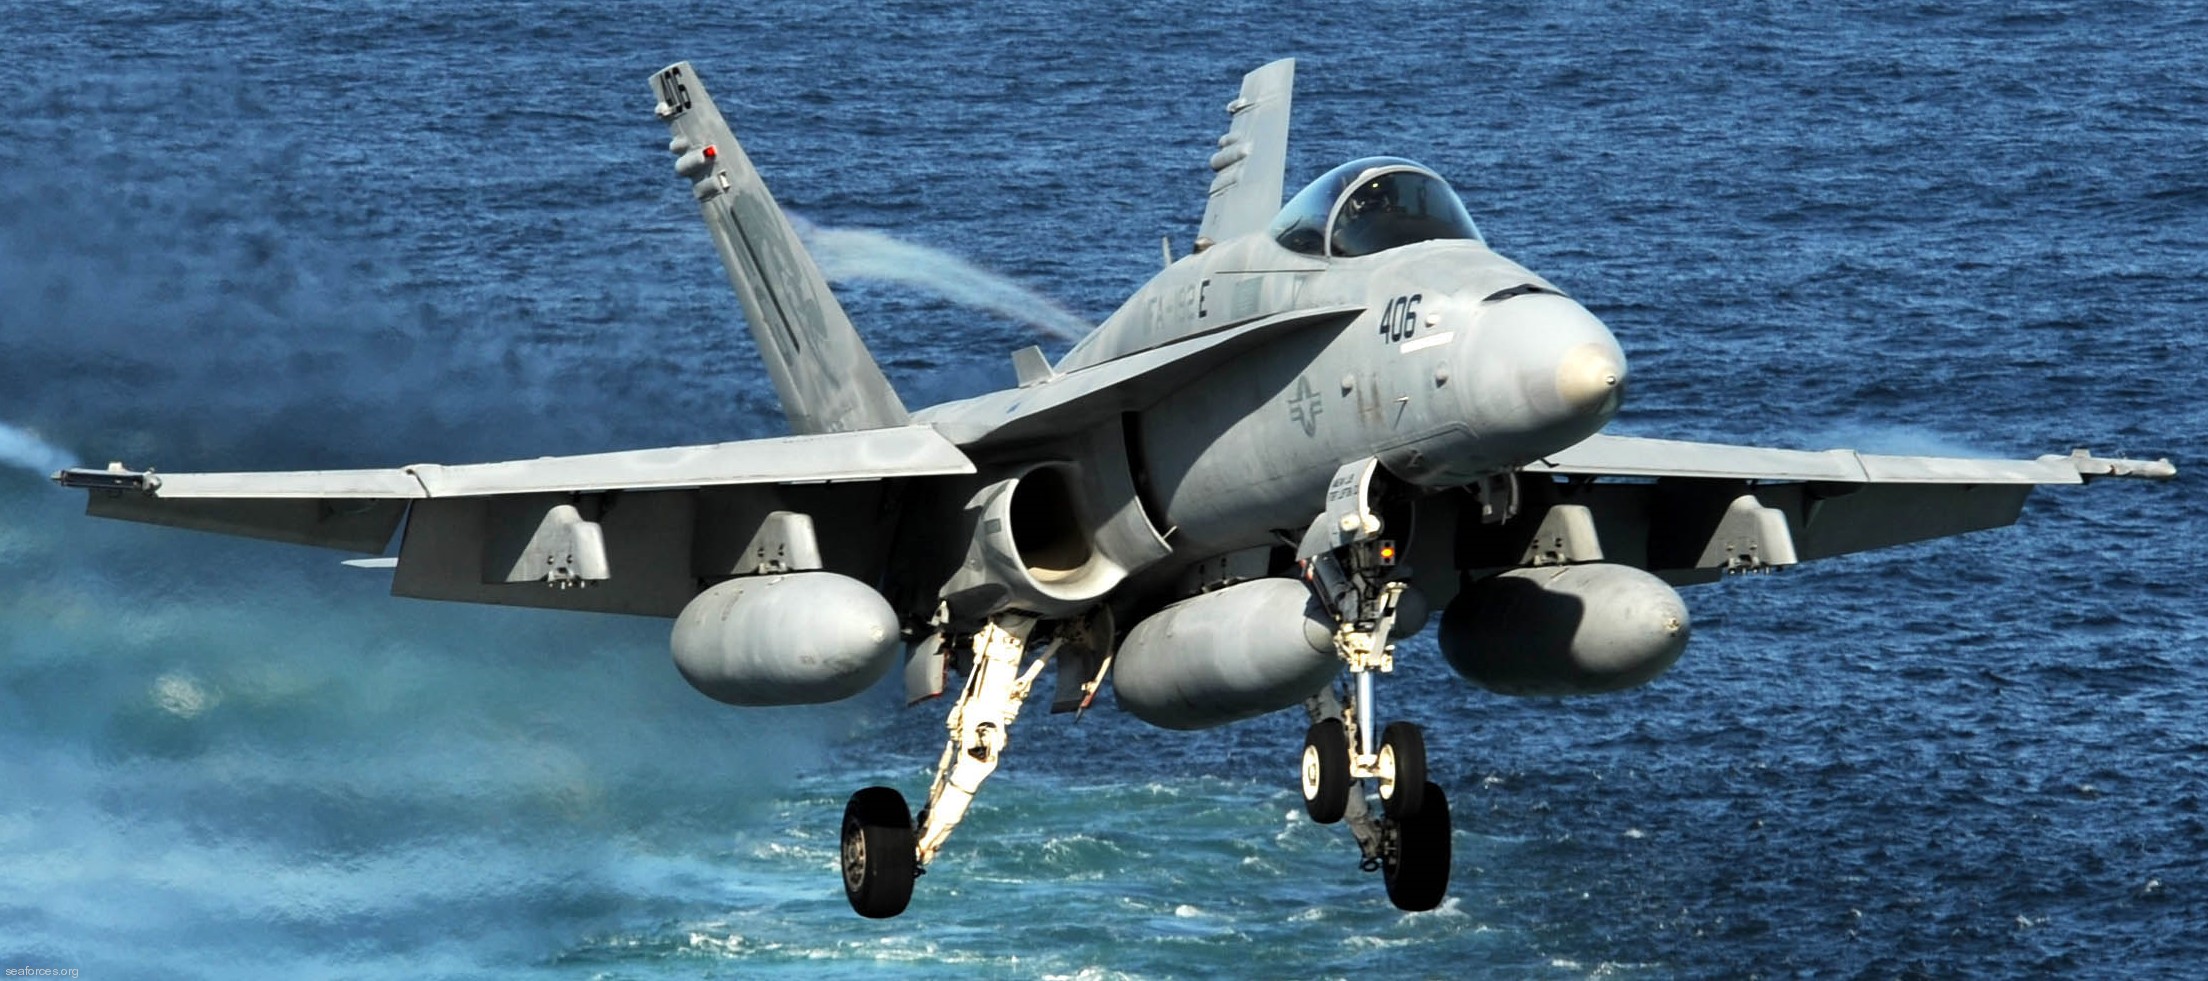 vfa-192 golden dragons strike fighter squadron navy f/a-18c hornet carrier air wing cvw-9 uss john c. stennis cvn-74 40